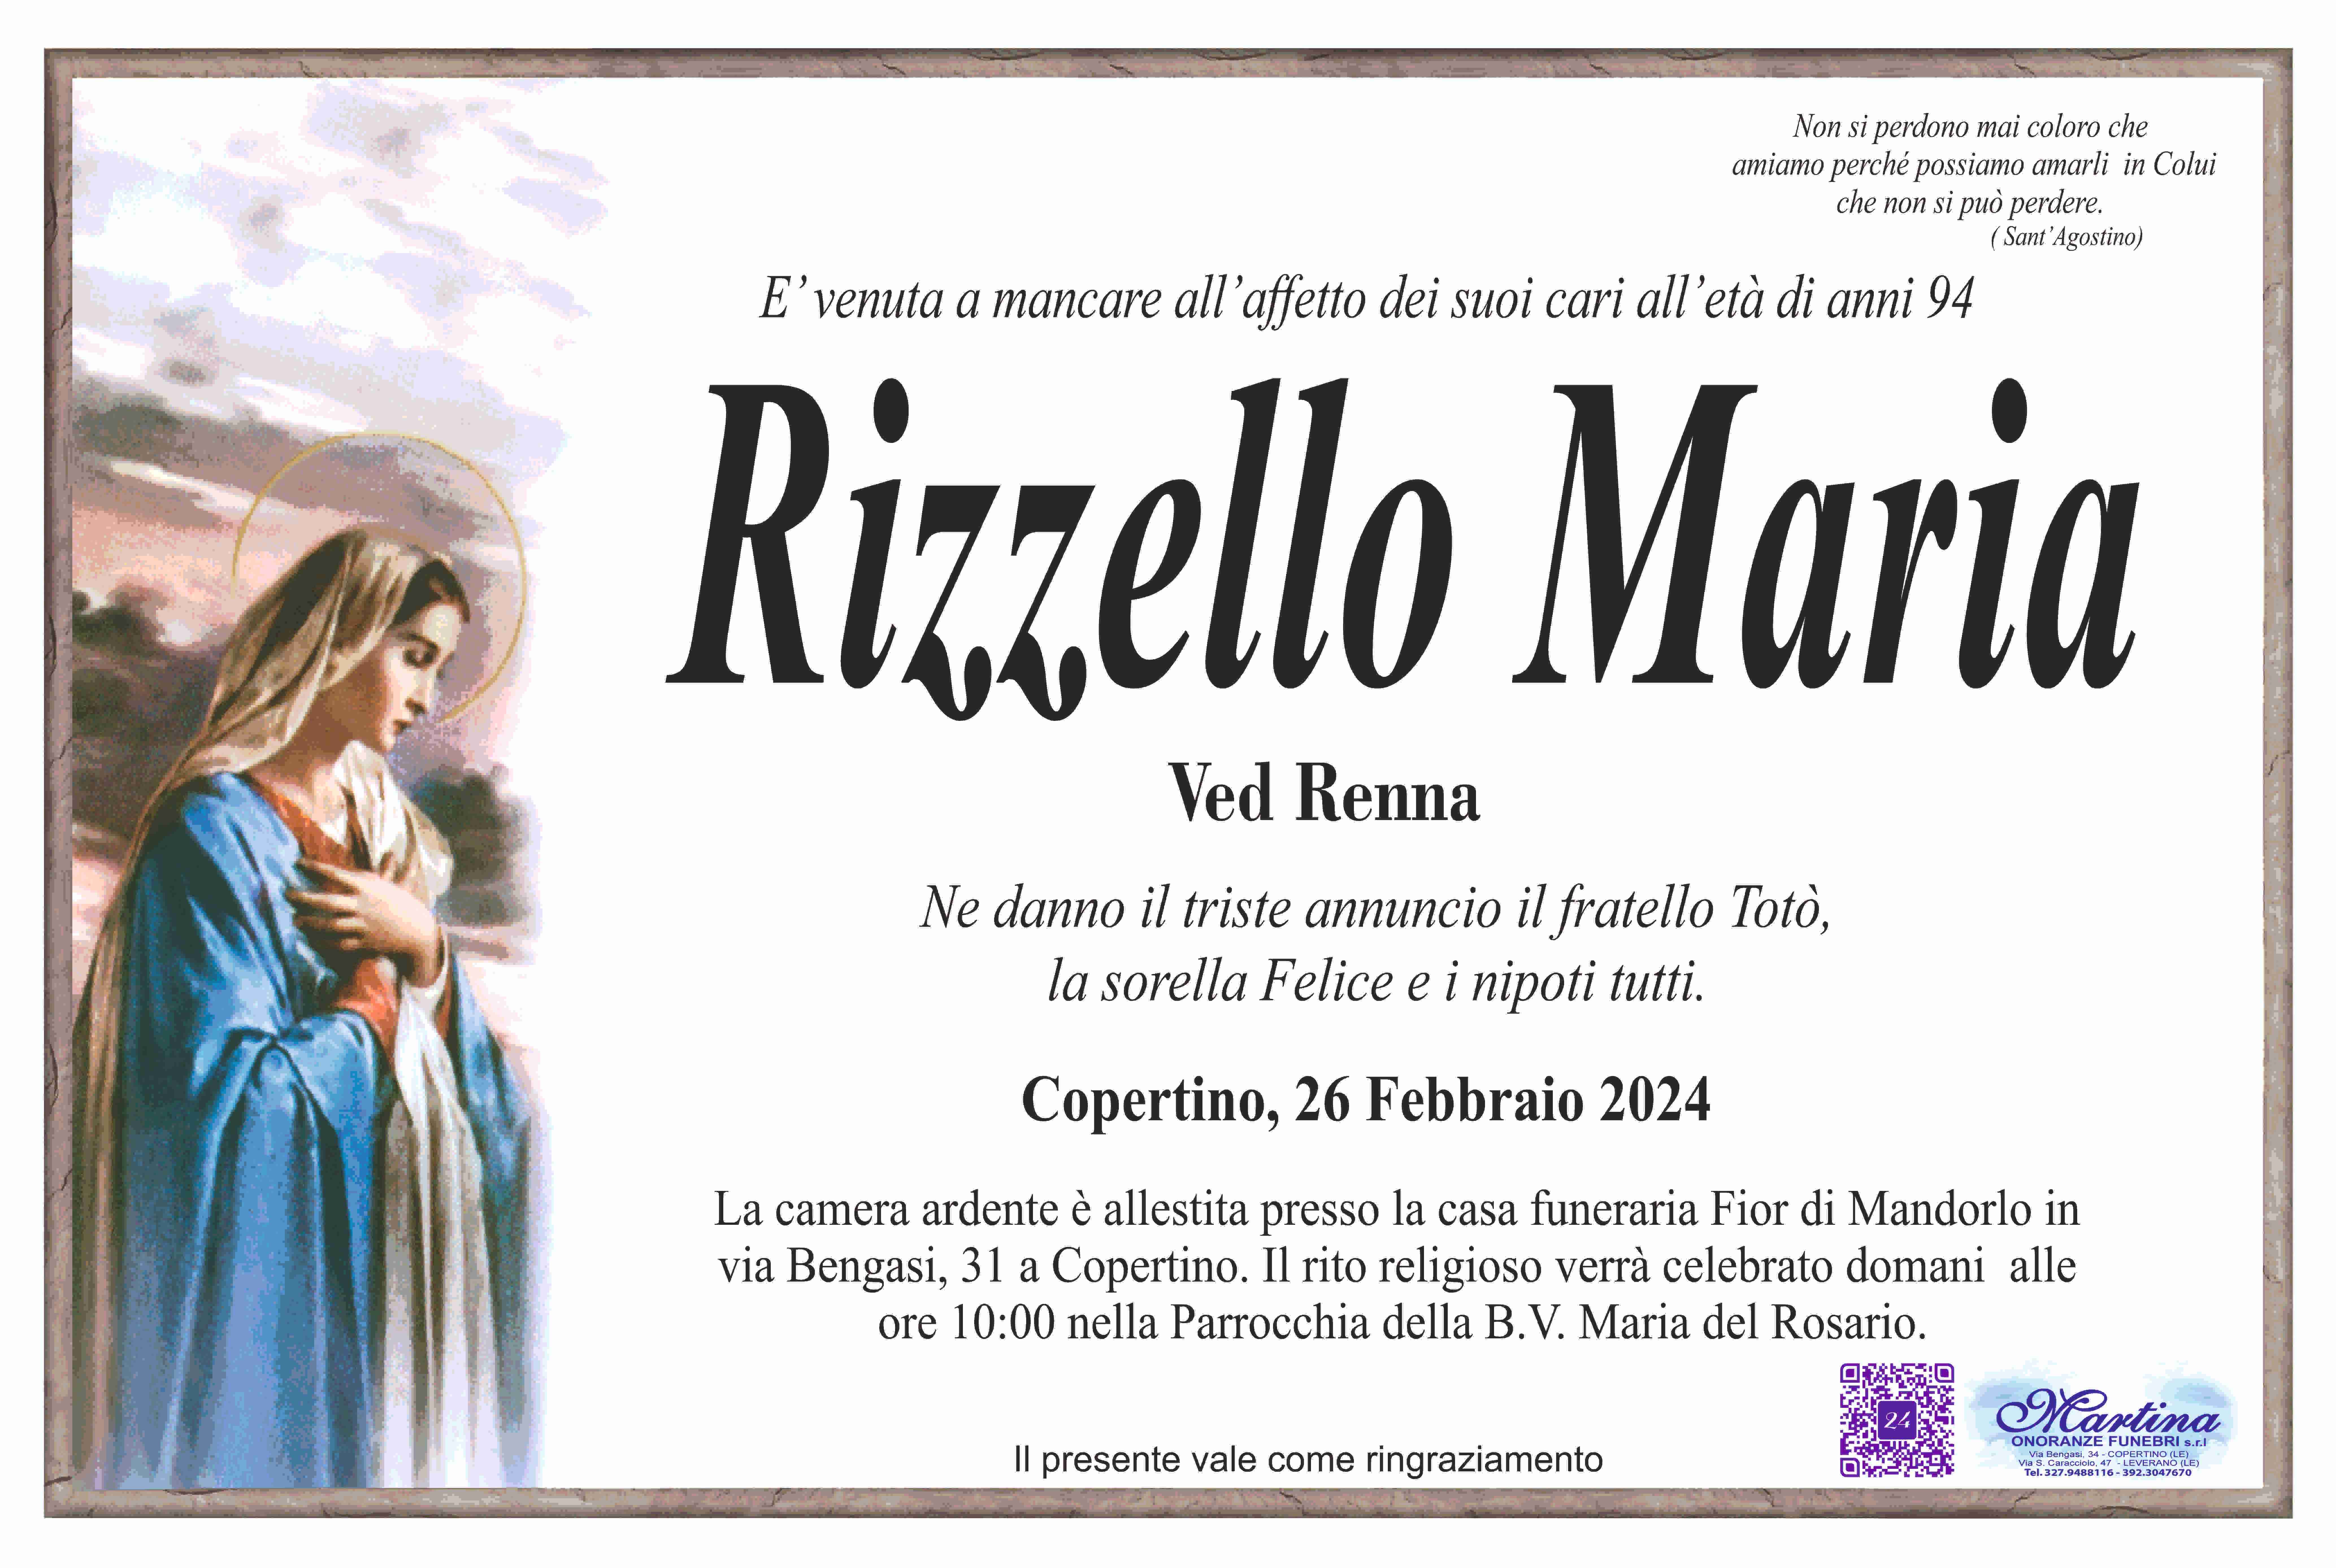 Maria Rizzello